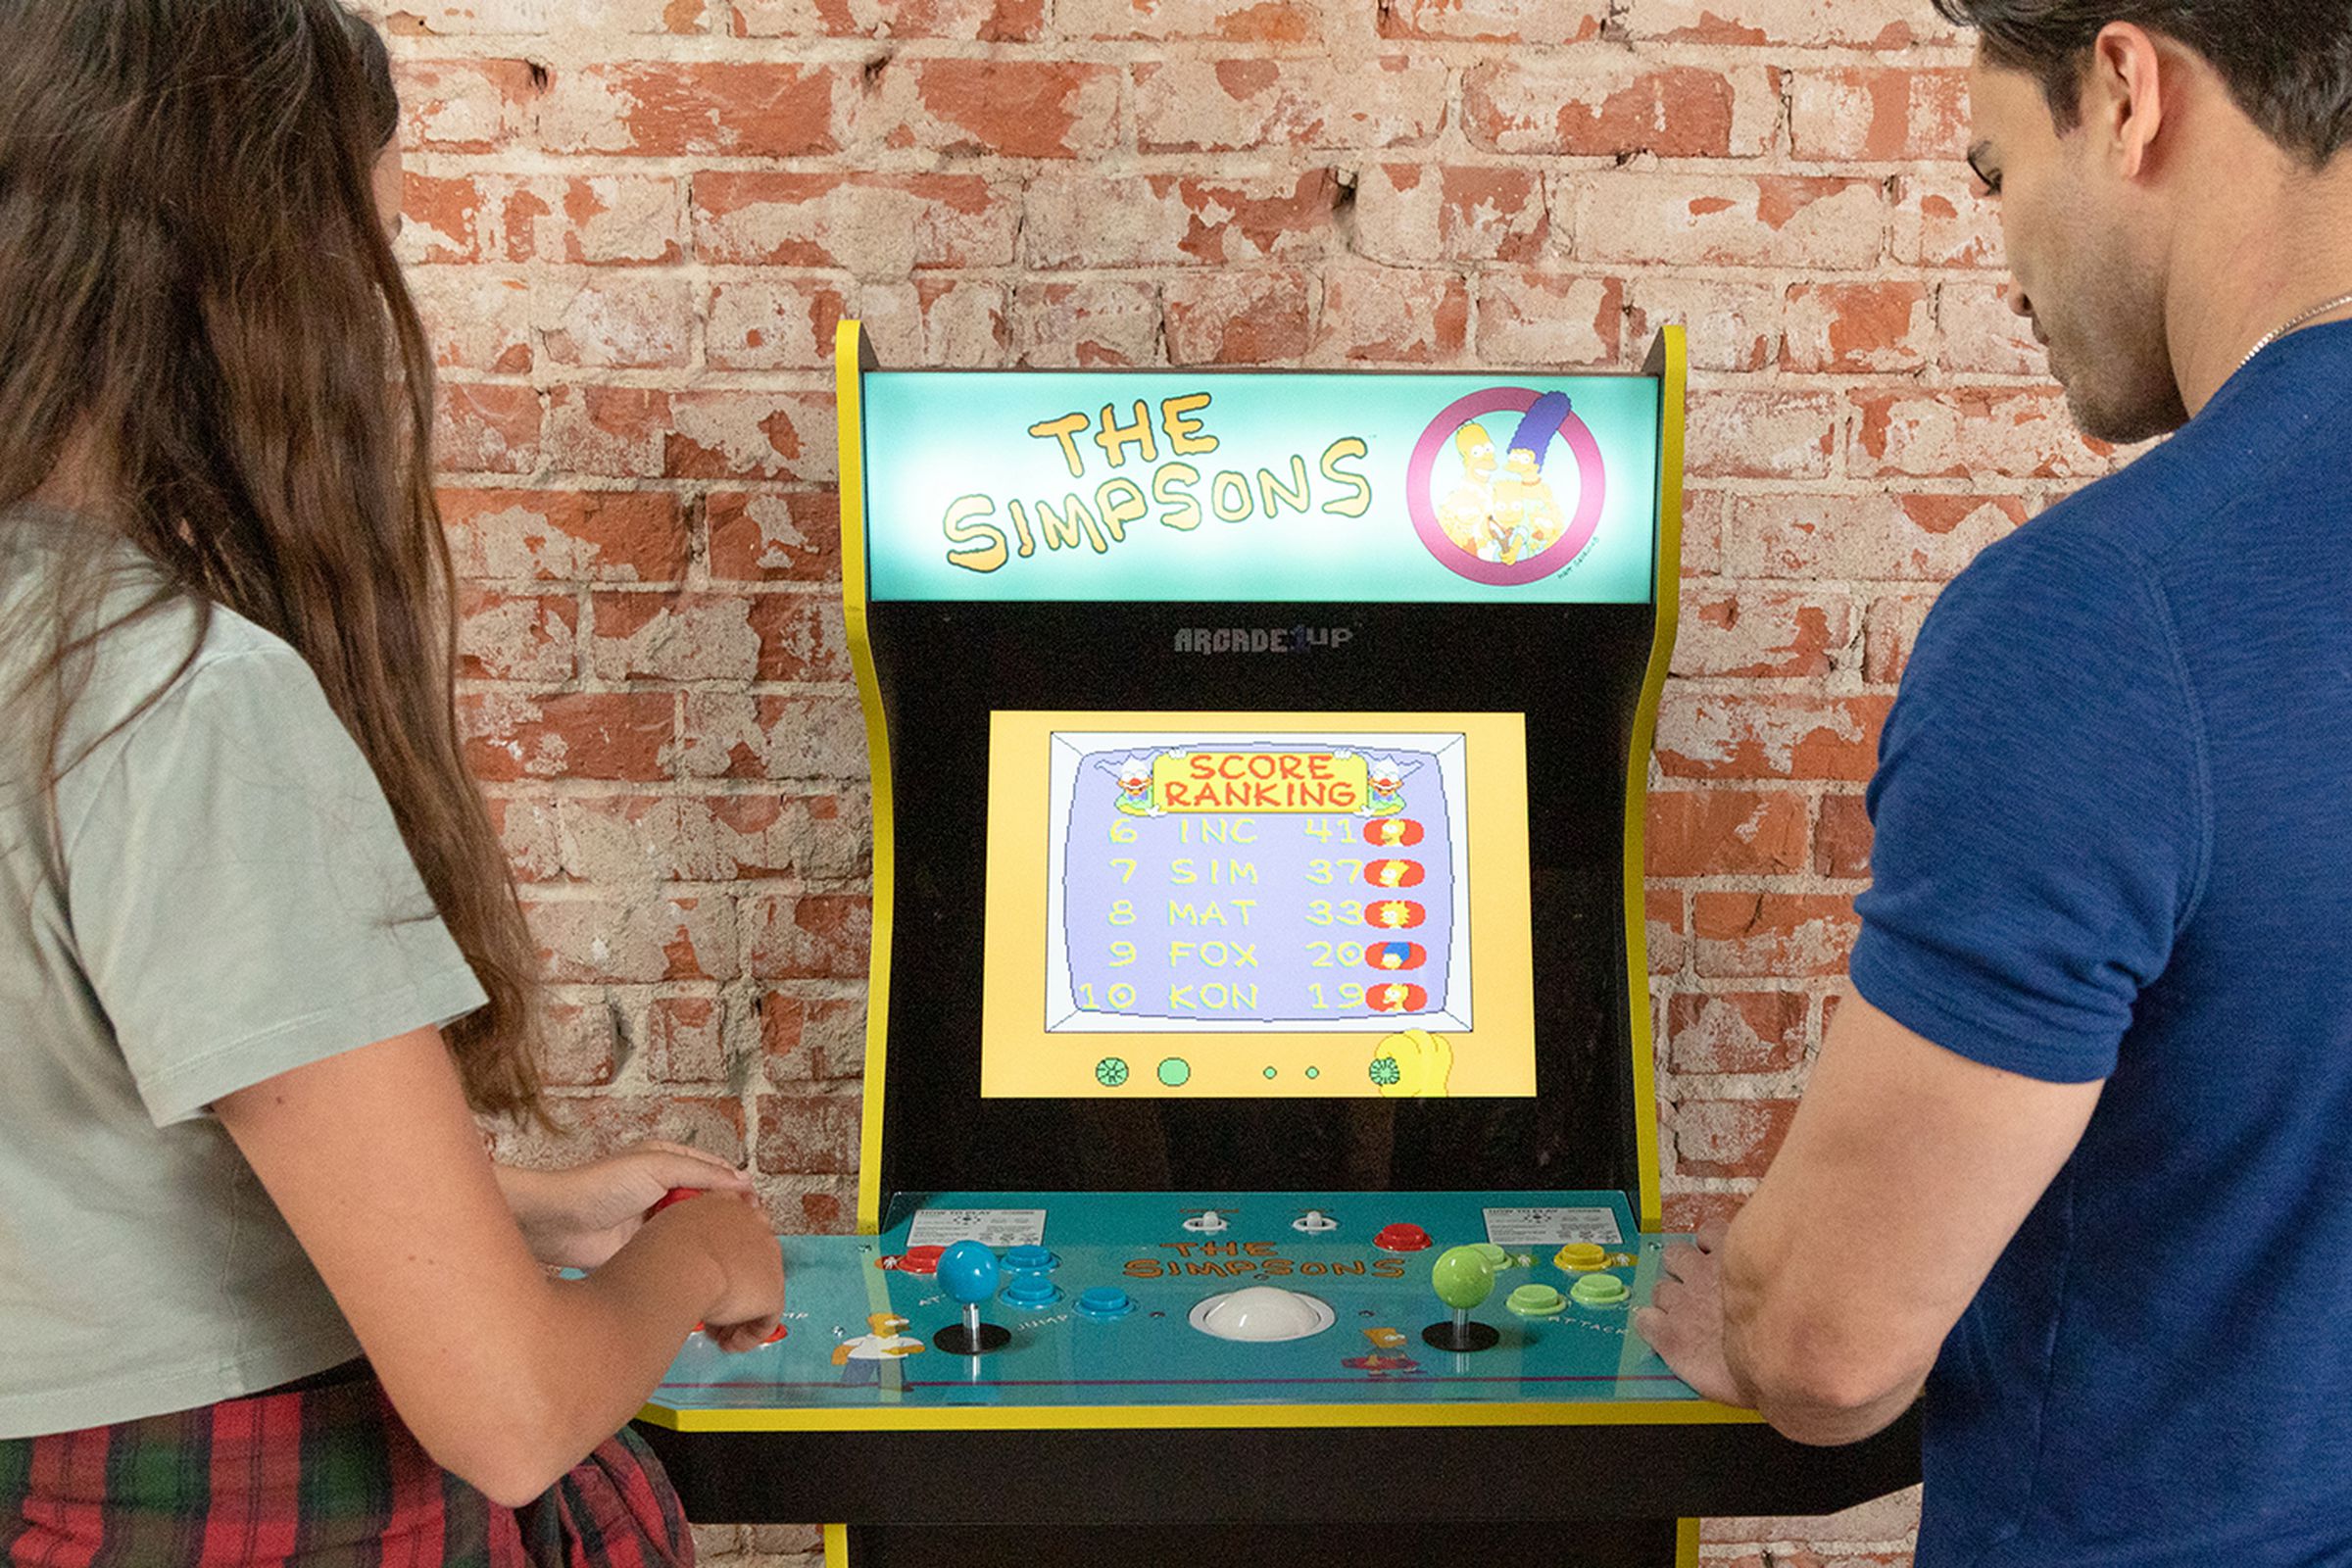 Arcade1Up’s The Simpsons arcade machine.